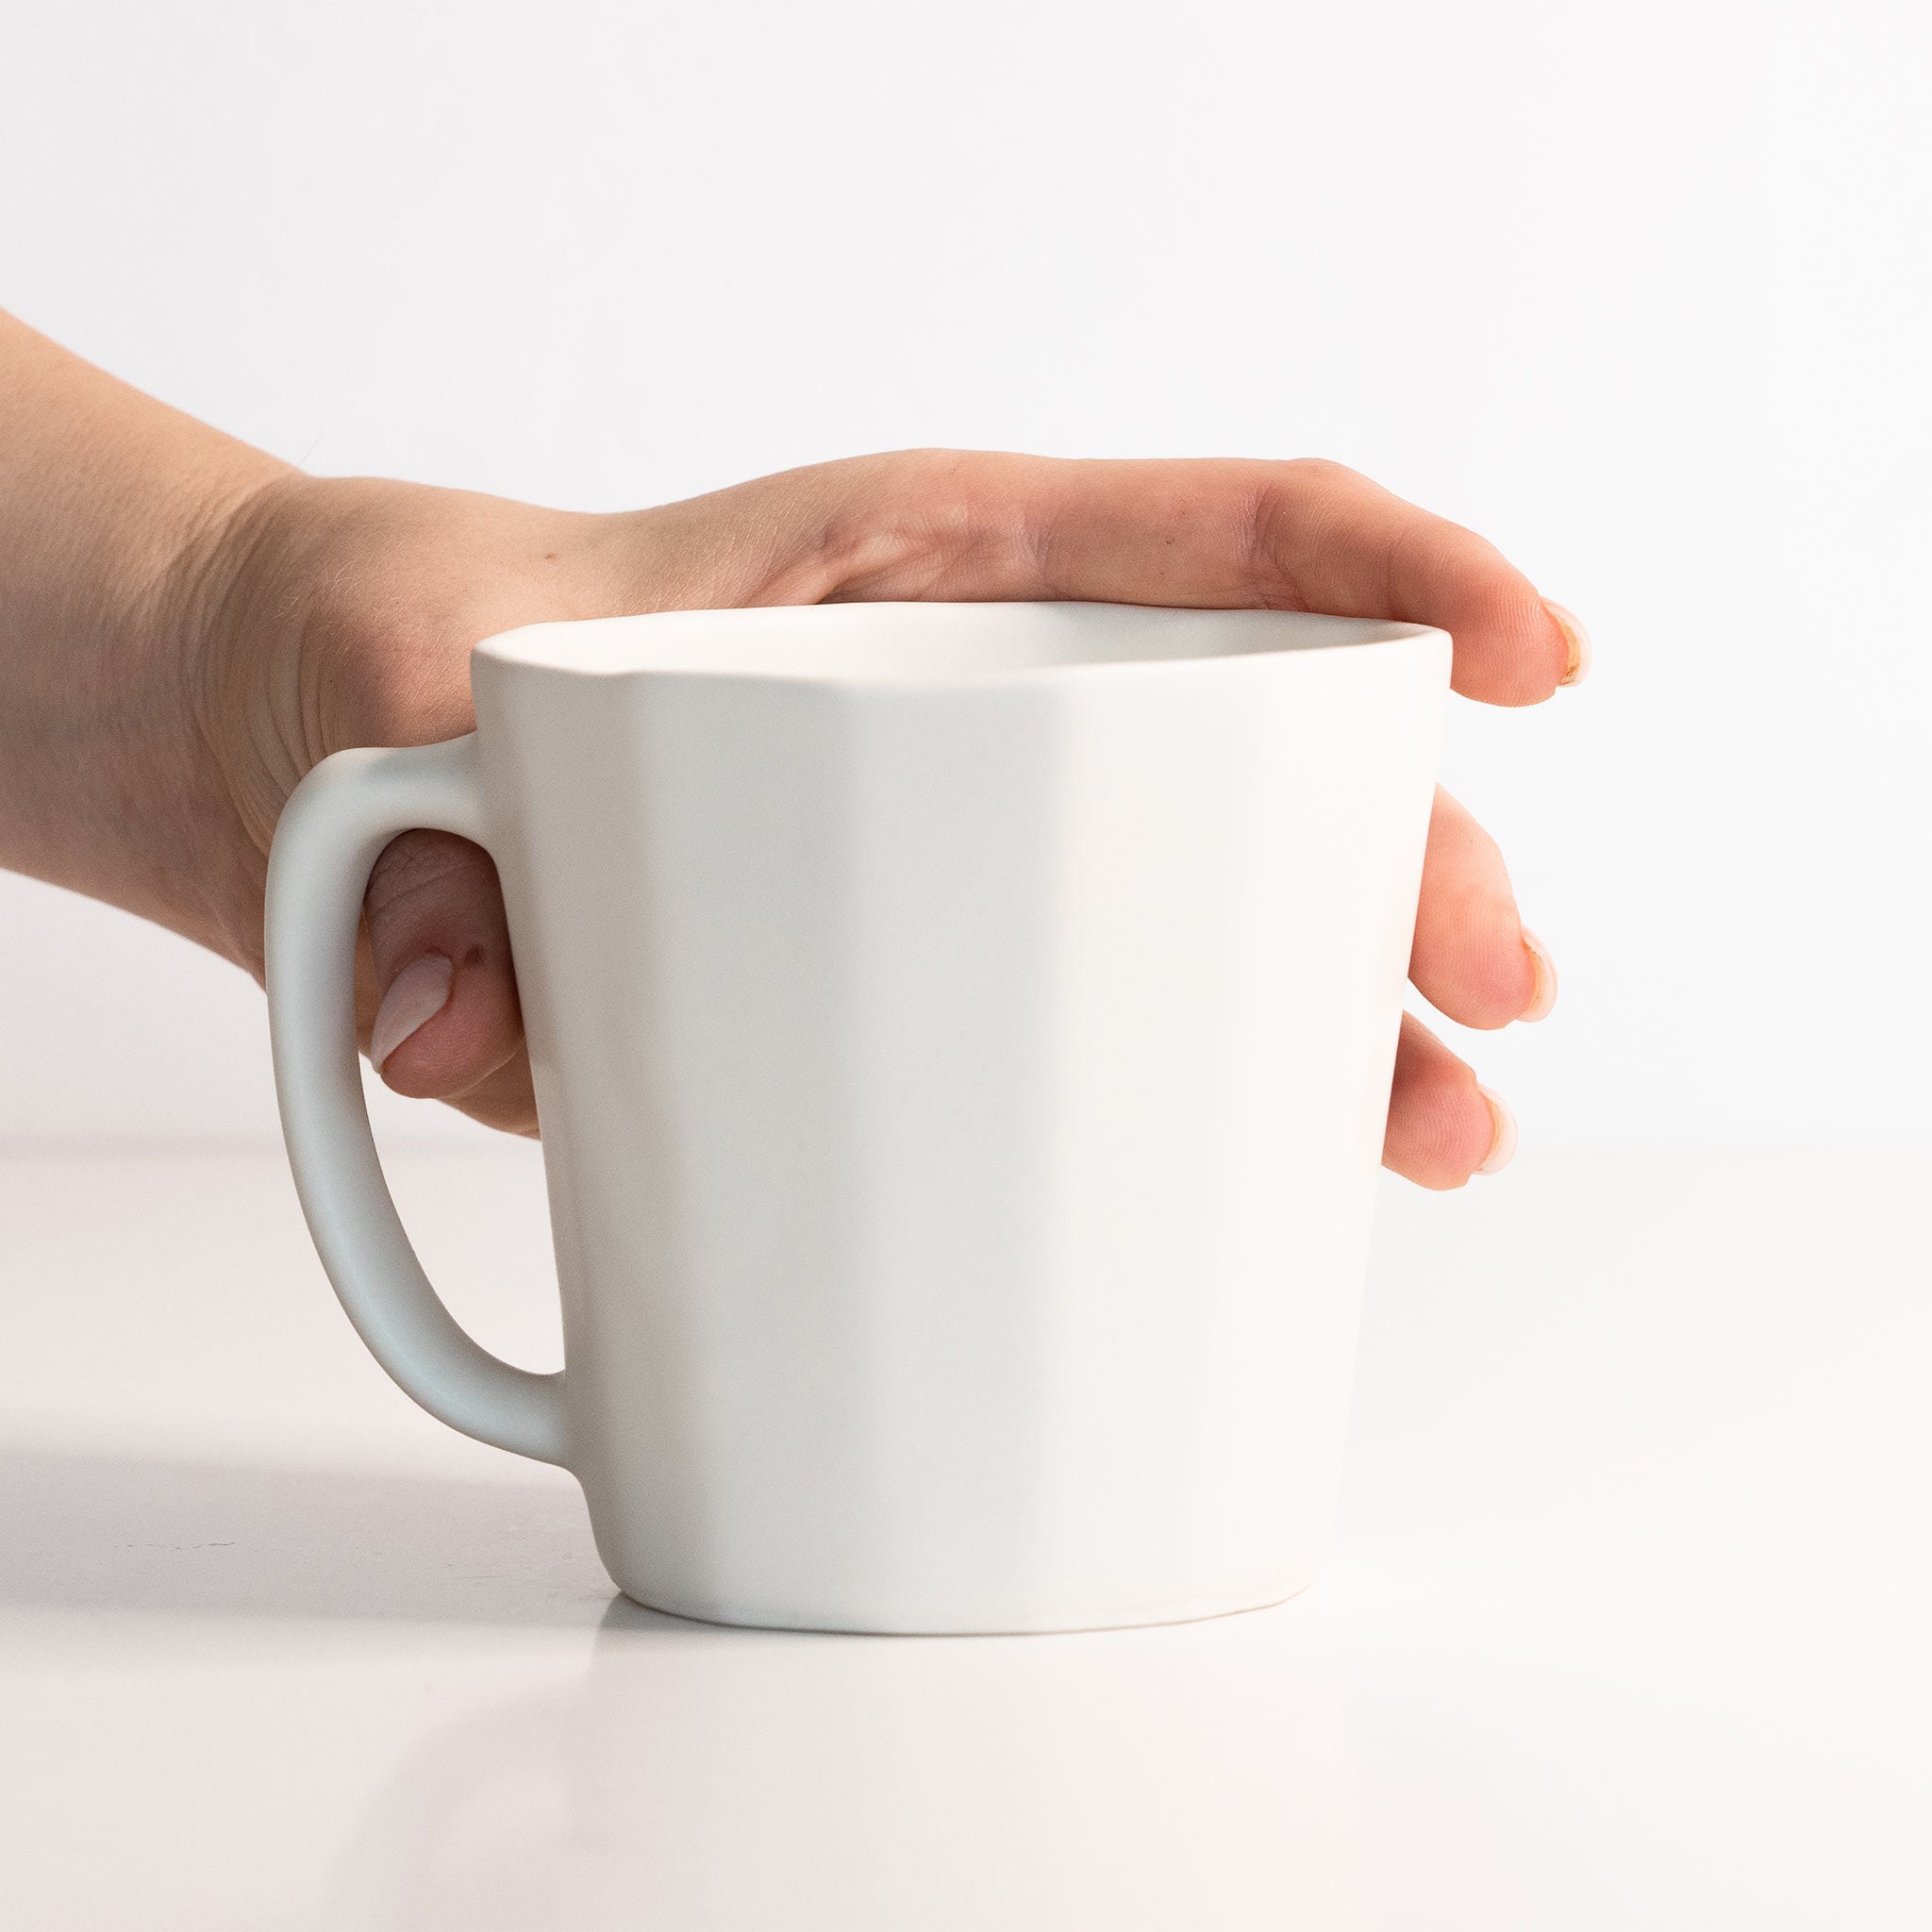 Monday Mug - Handmade Porcelain Coffee Cup Mica Black The Bright Angle